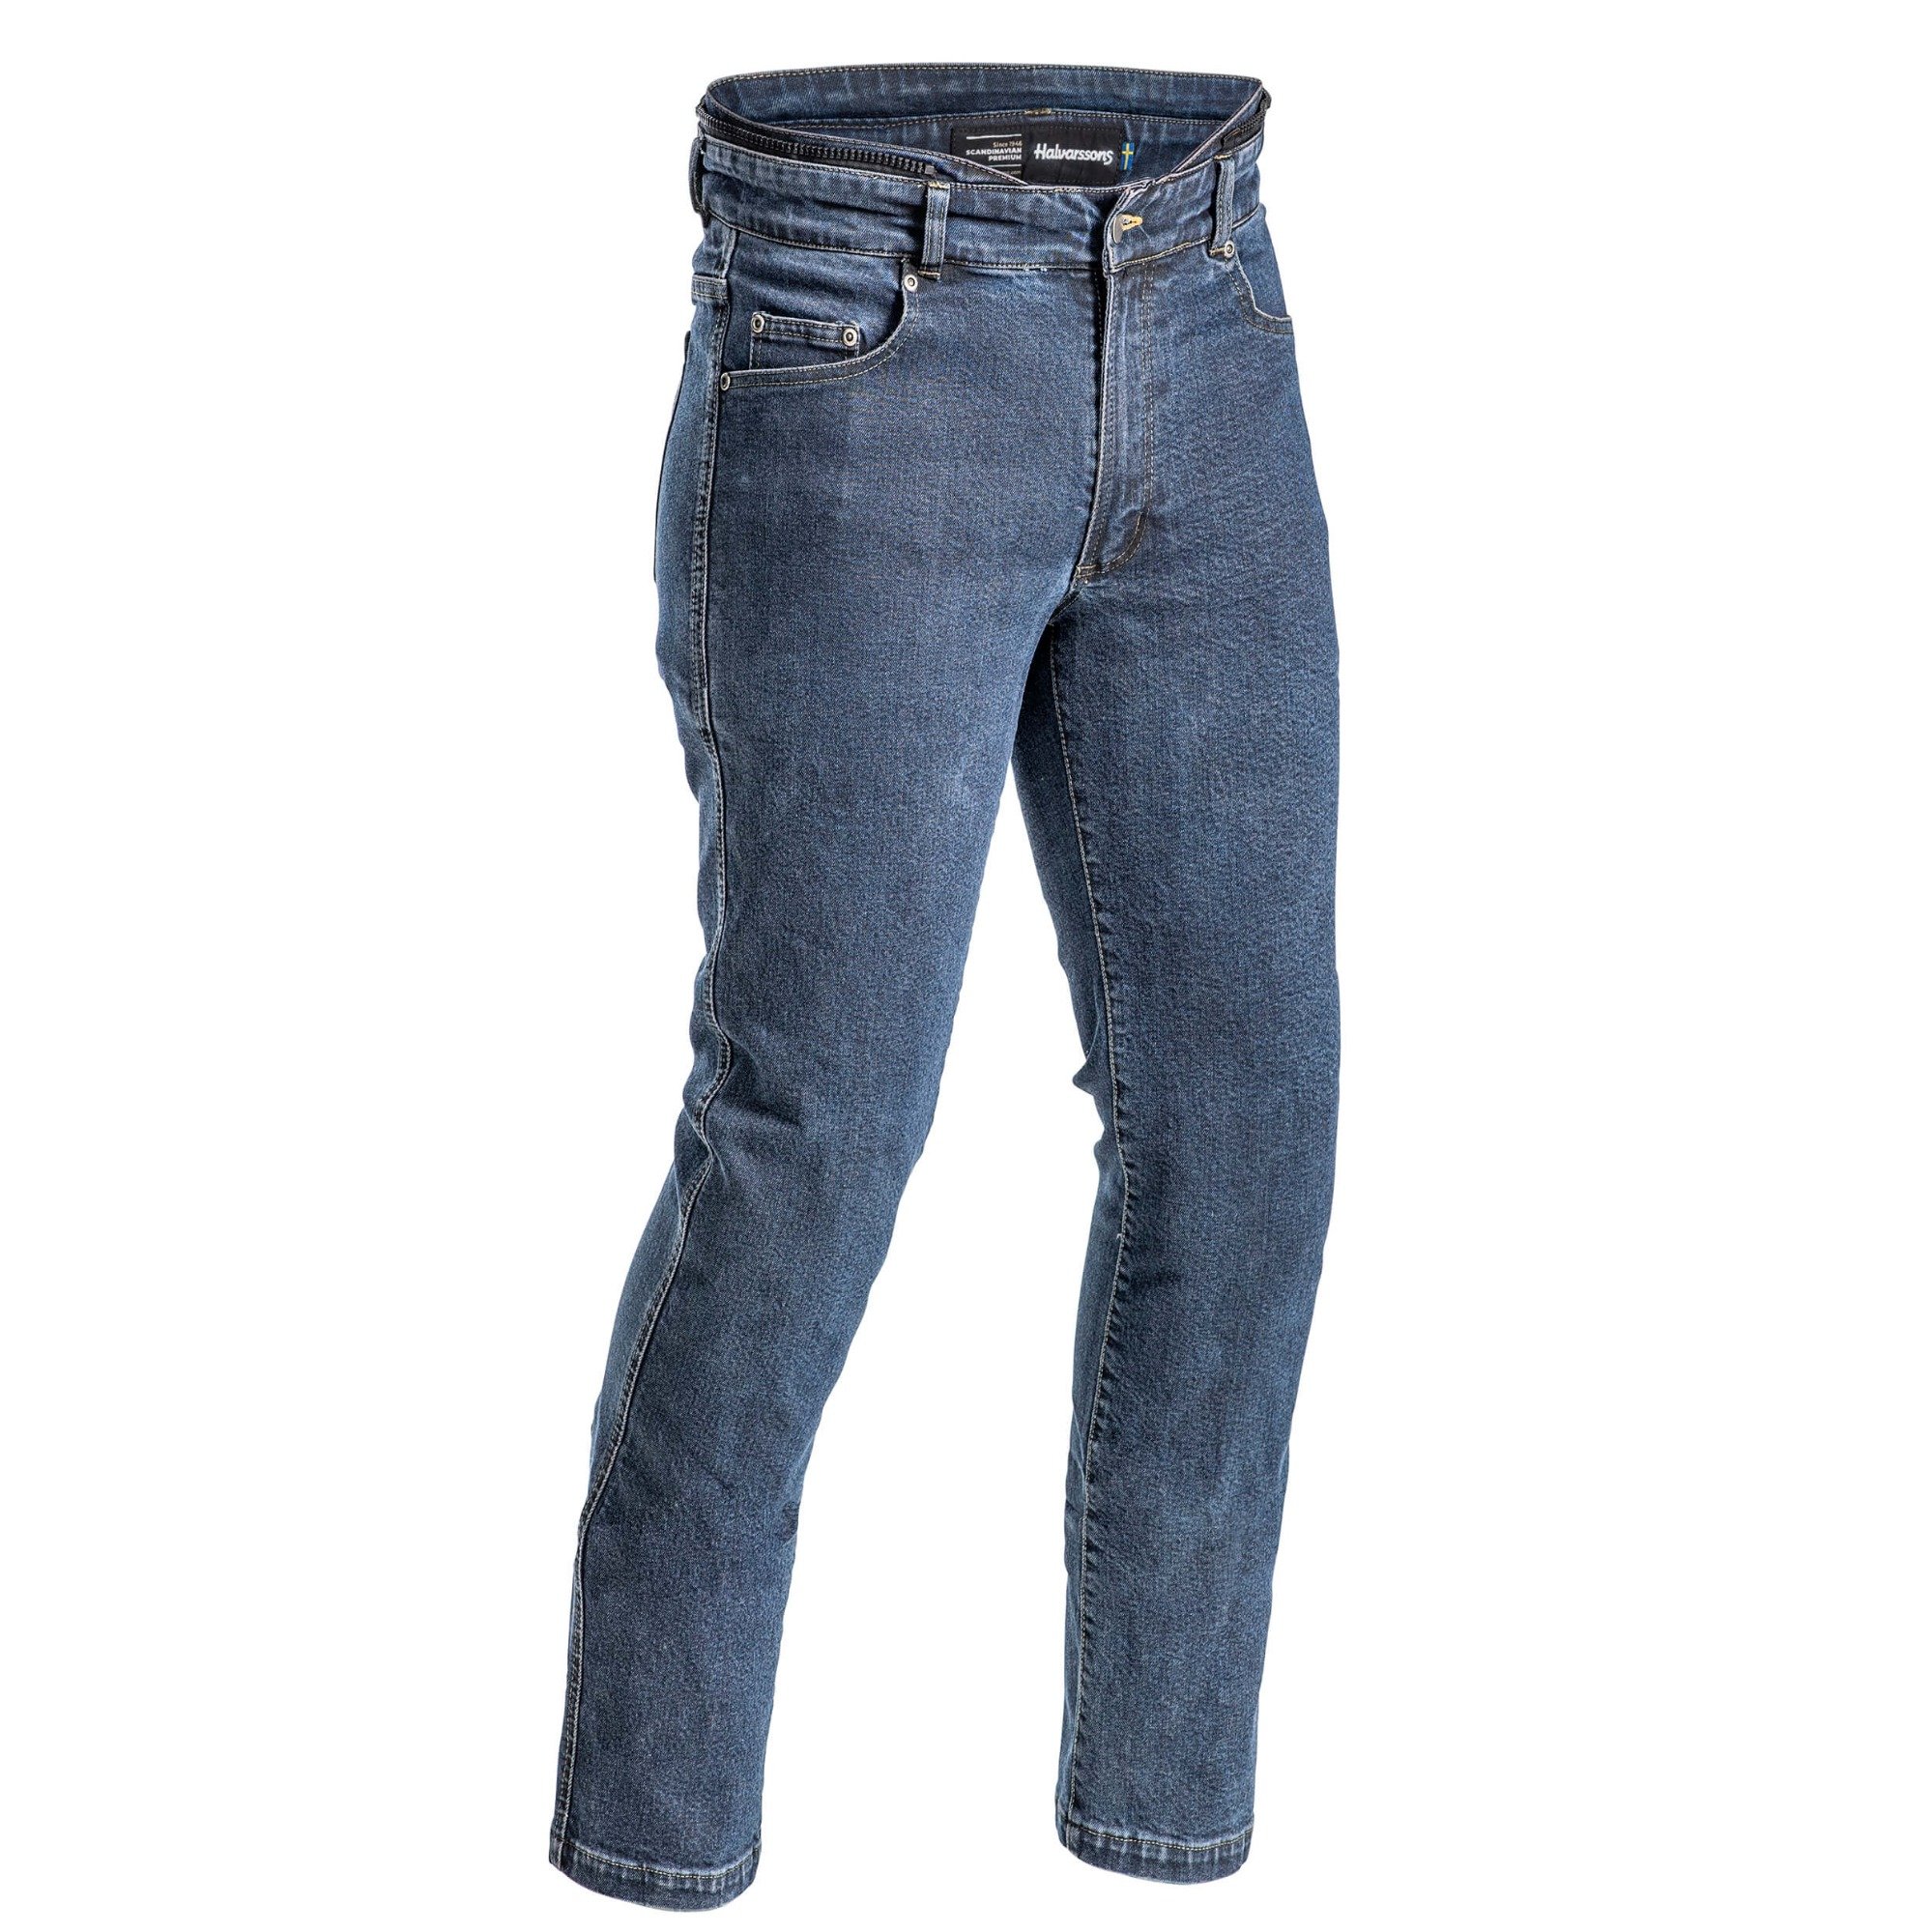 Image of Halvarssons Jeans Rogen Blue Short Size 52 ID 6438235239041